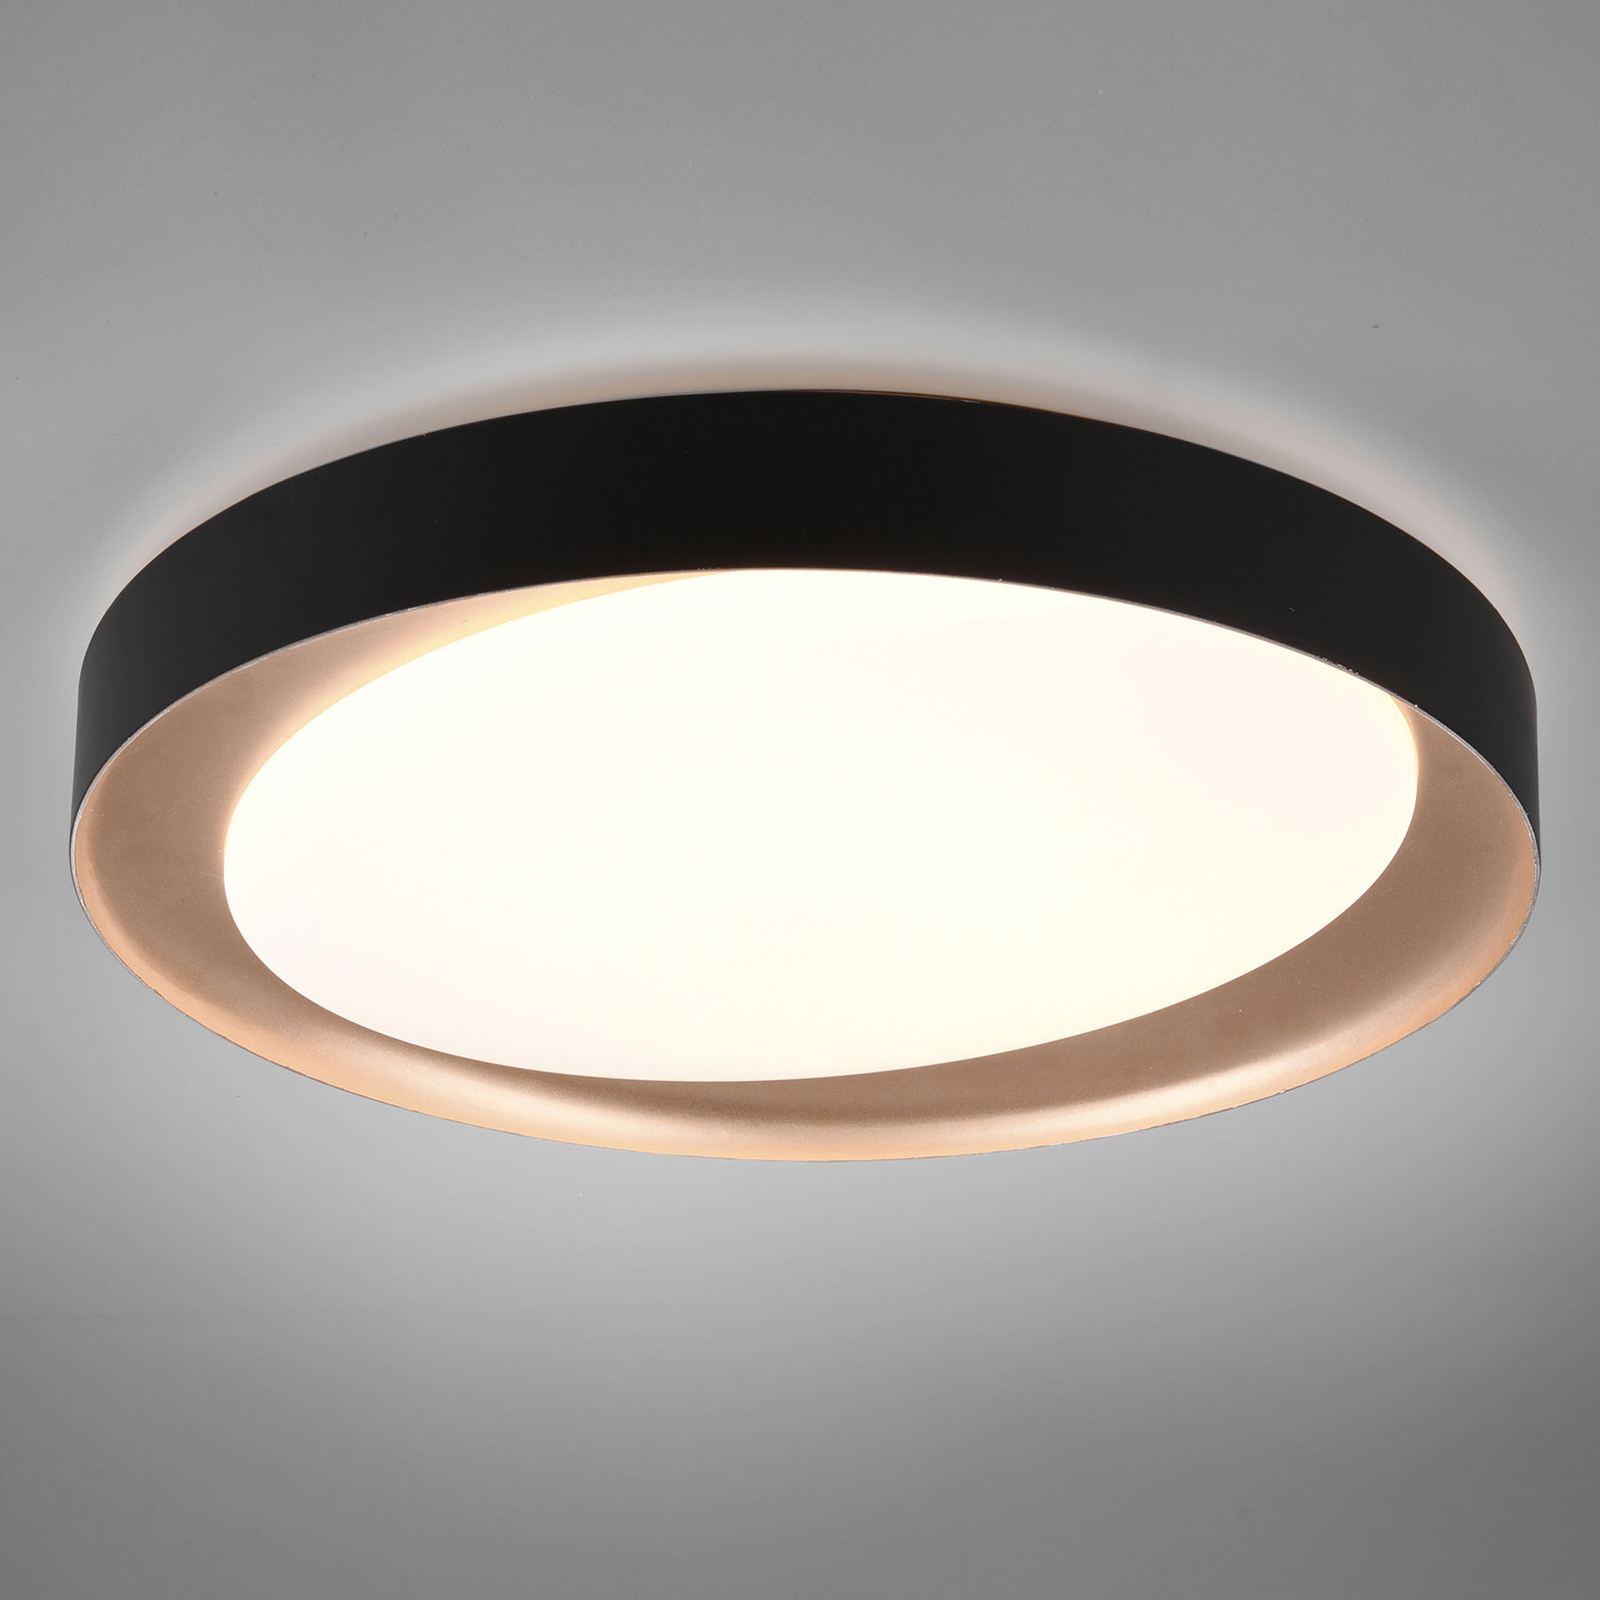 LED-taklampa Zeta tunable white, svart/guld